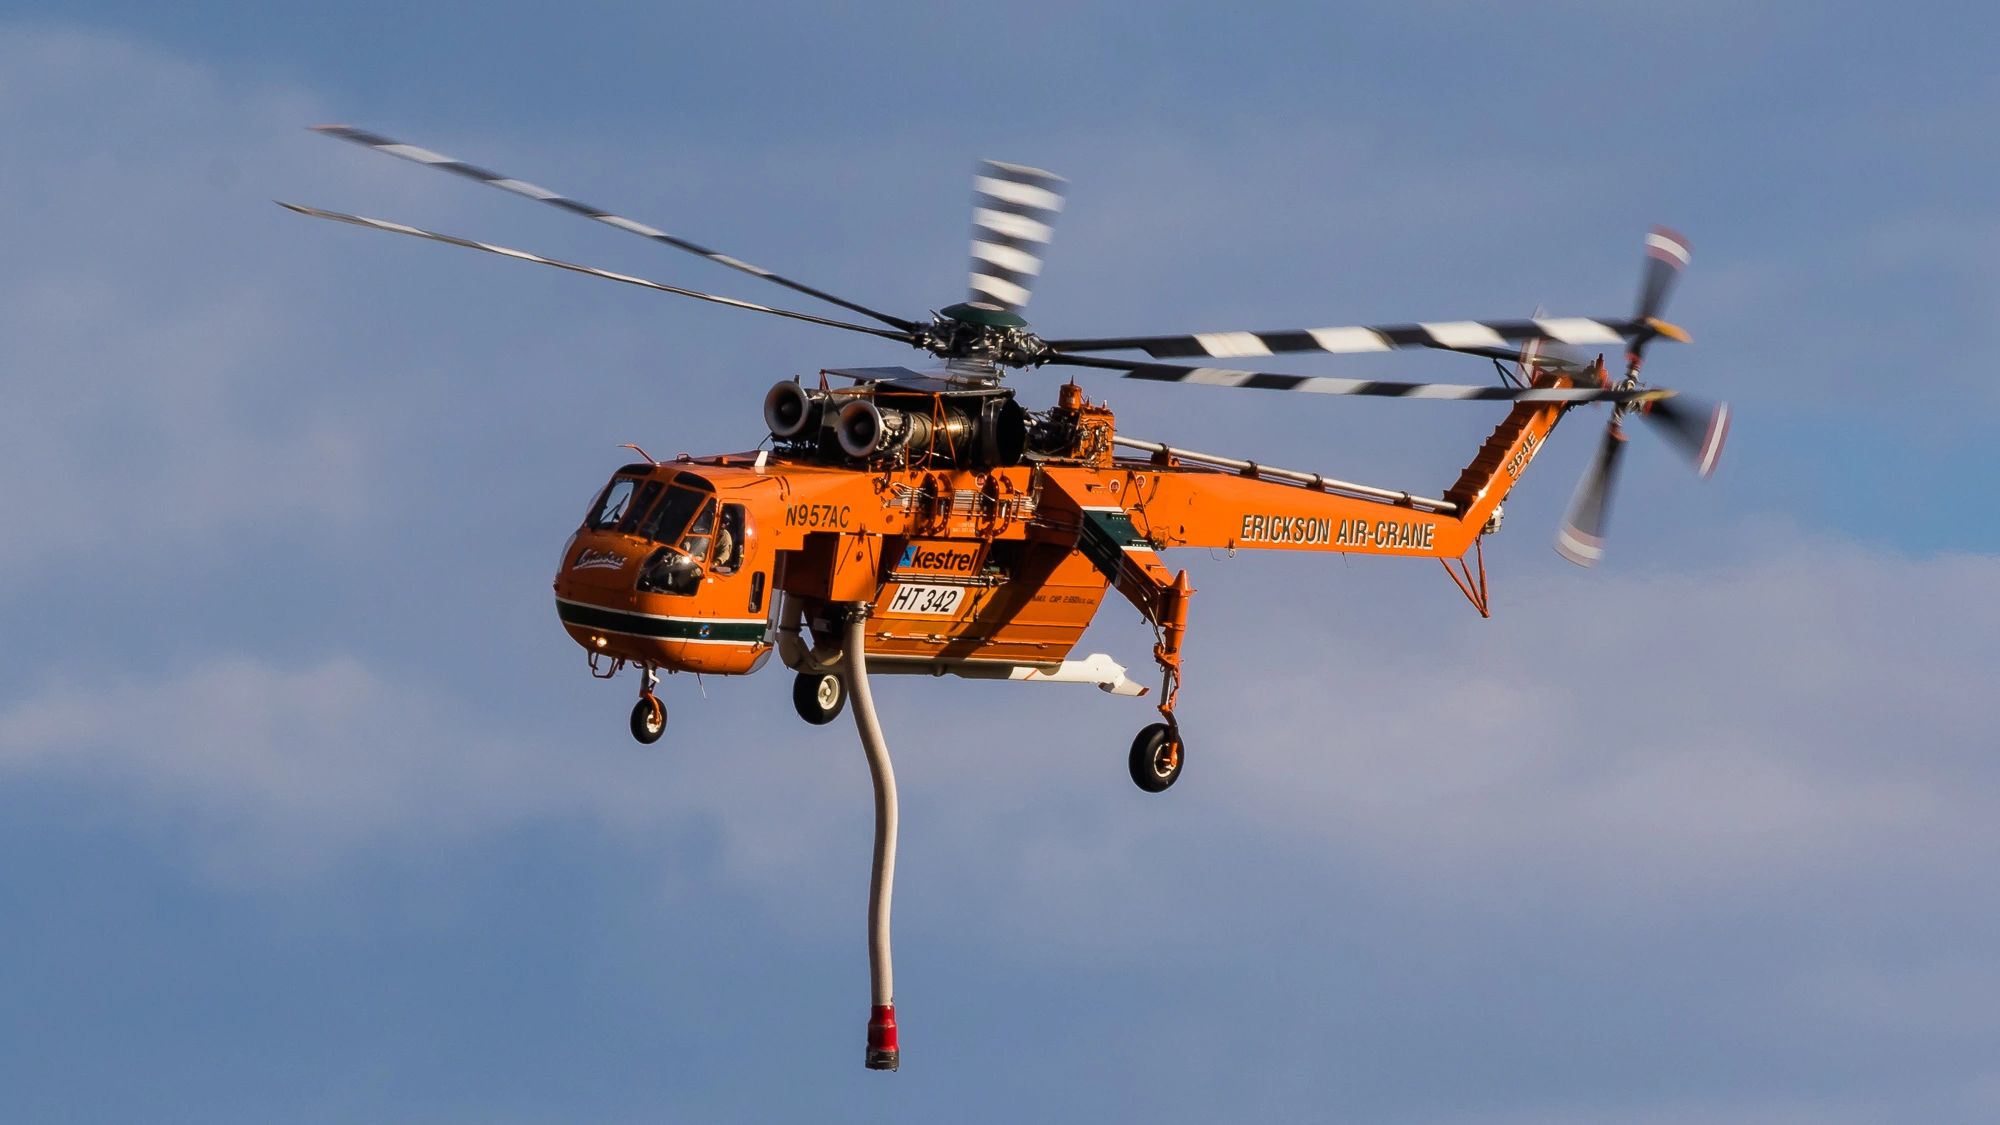 Erickson S 64f Air Crane® Helicopter Returning To Australia